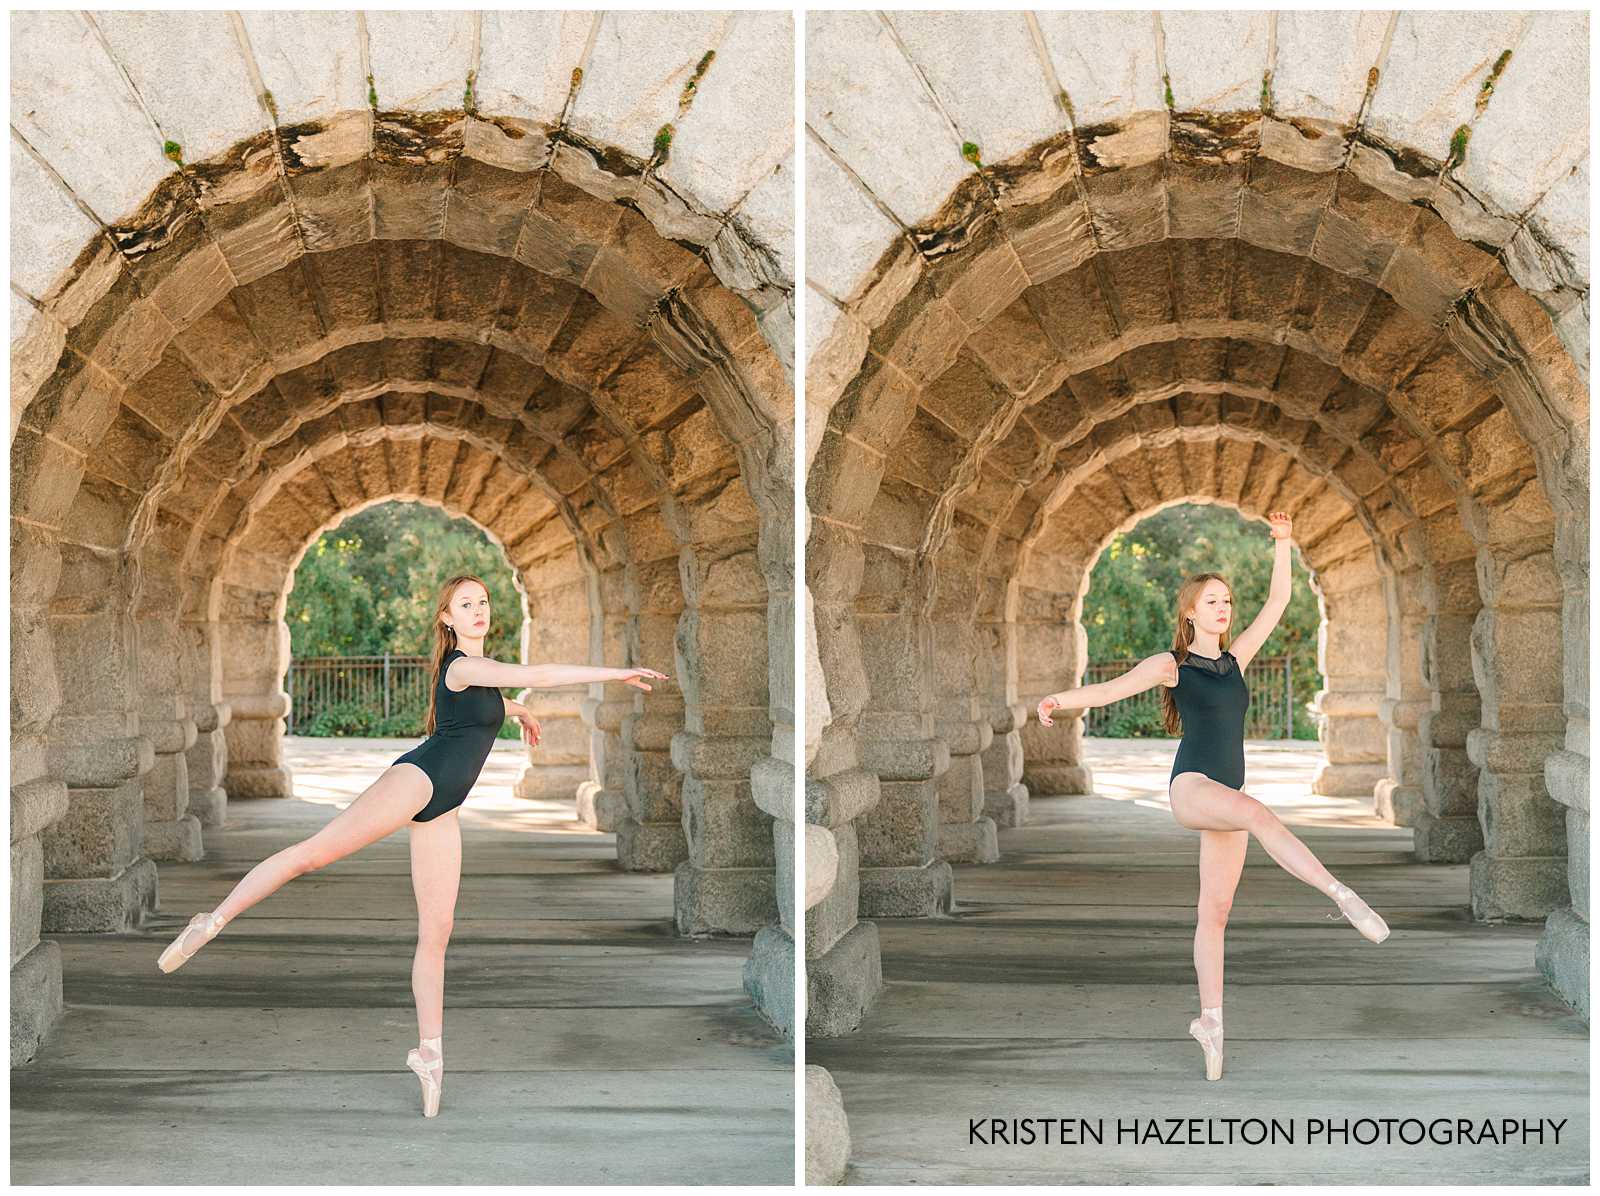 Dance Senior Photos in Chicago by Chicago Senior and Family Photographer Kristen Hazelton